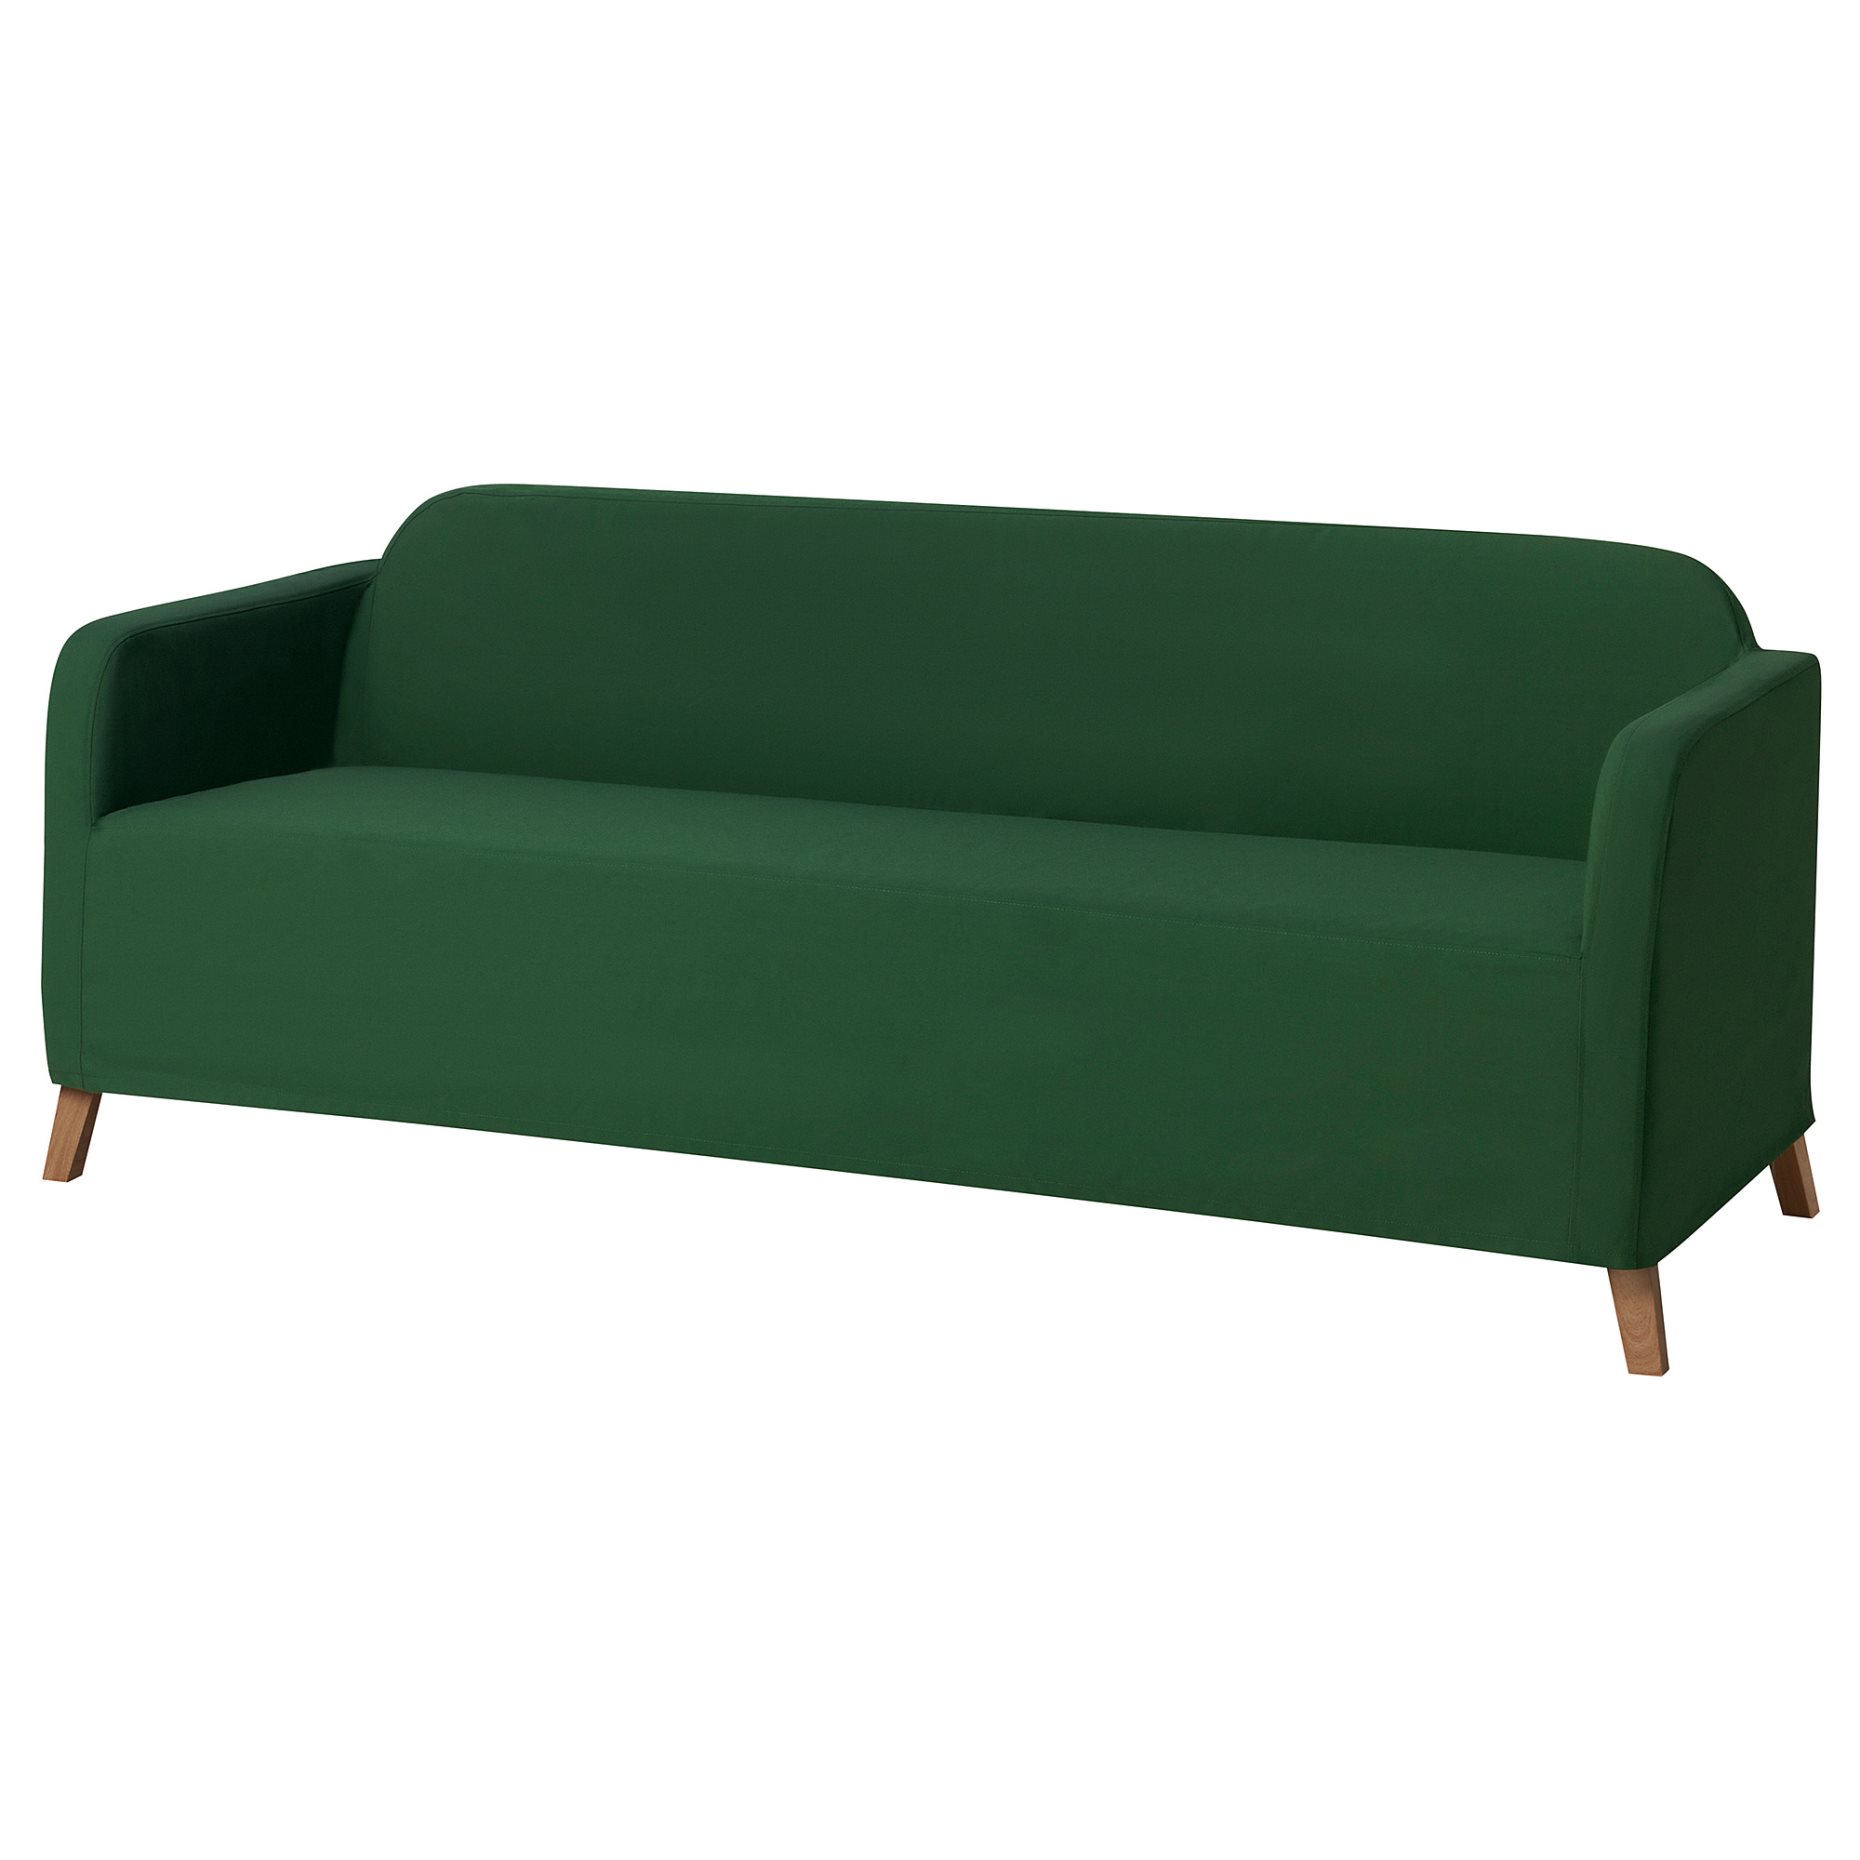 LINANÄS, sofa protector for 3-seat sofa, 605.644.02